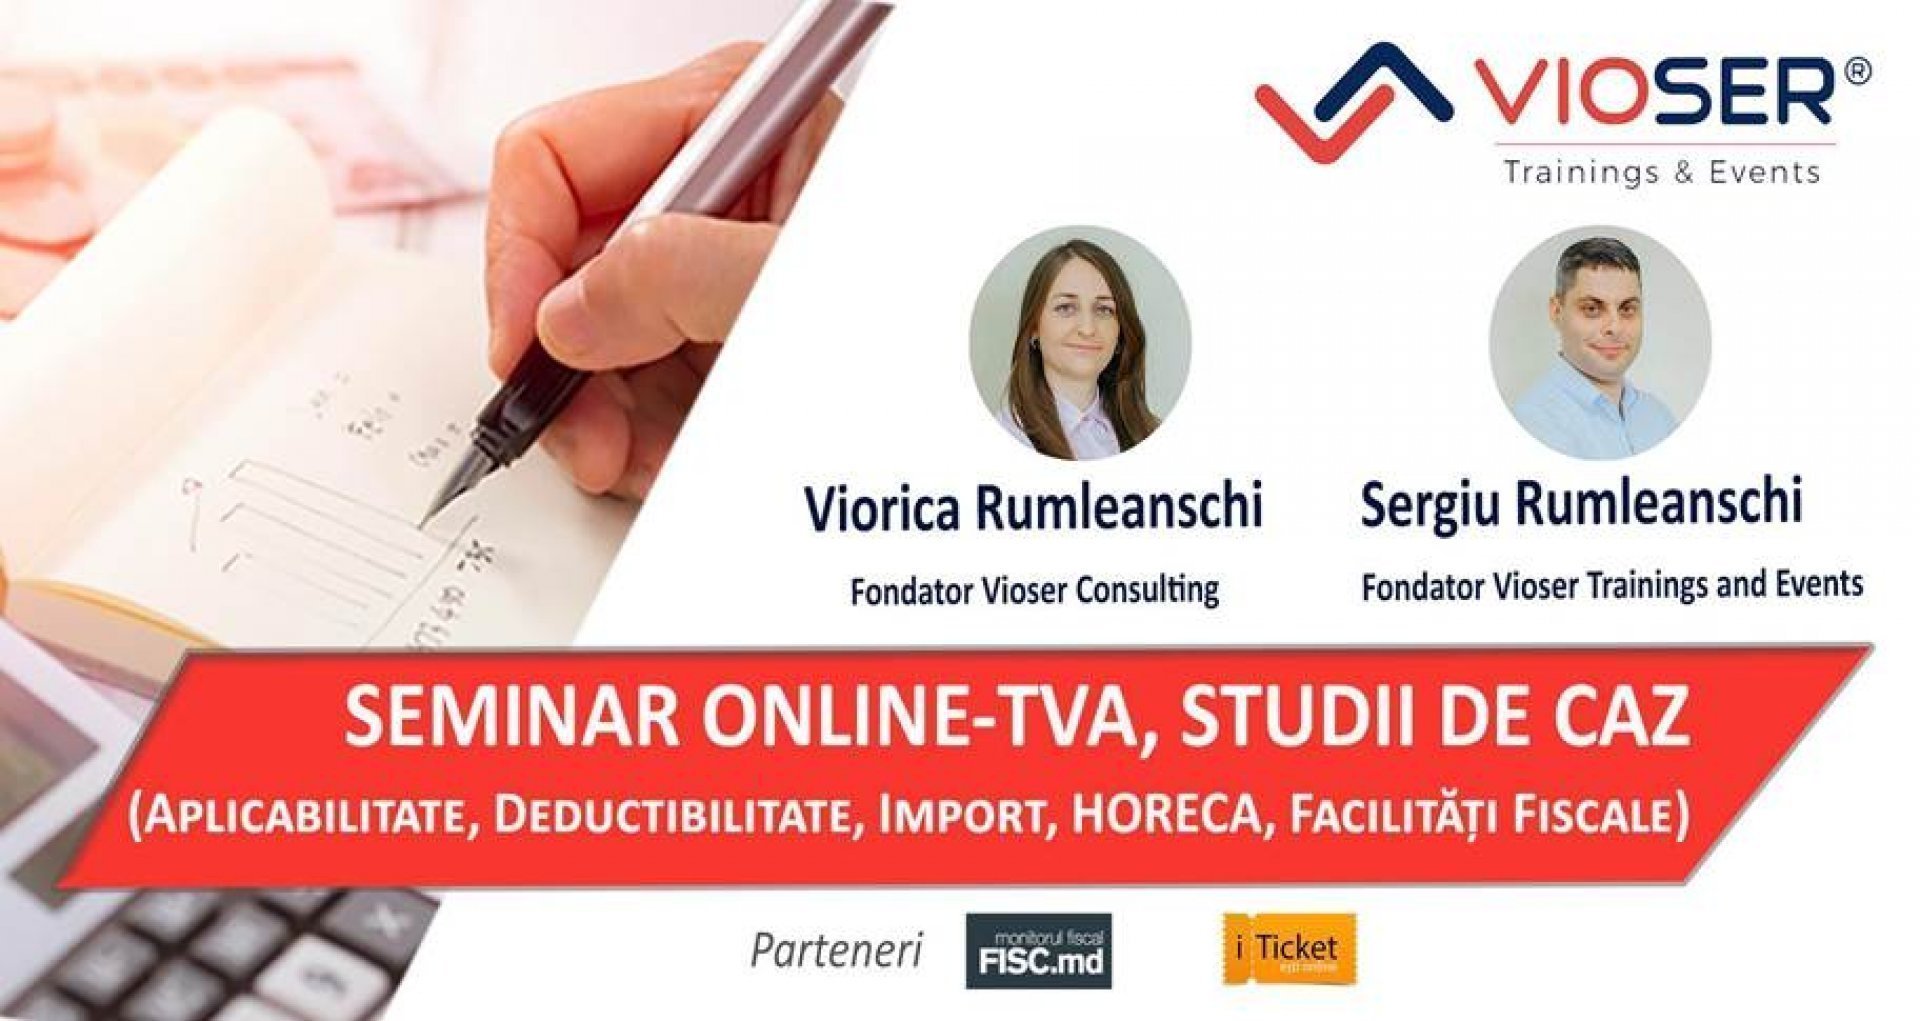 Seminar Online - TVA, Studii de caz 29.11.2019